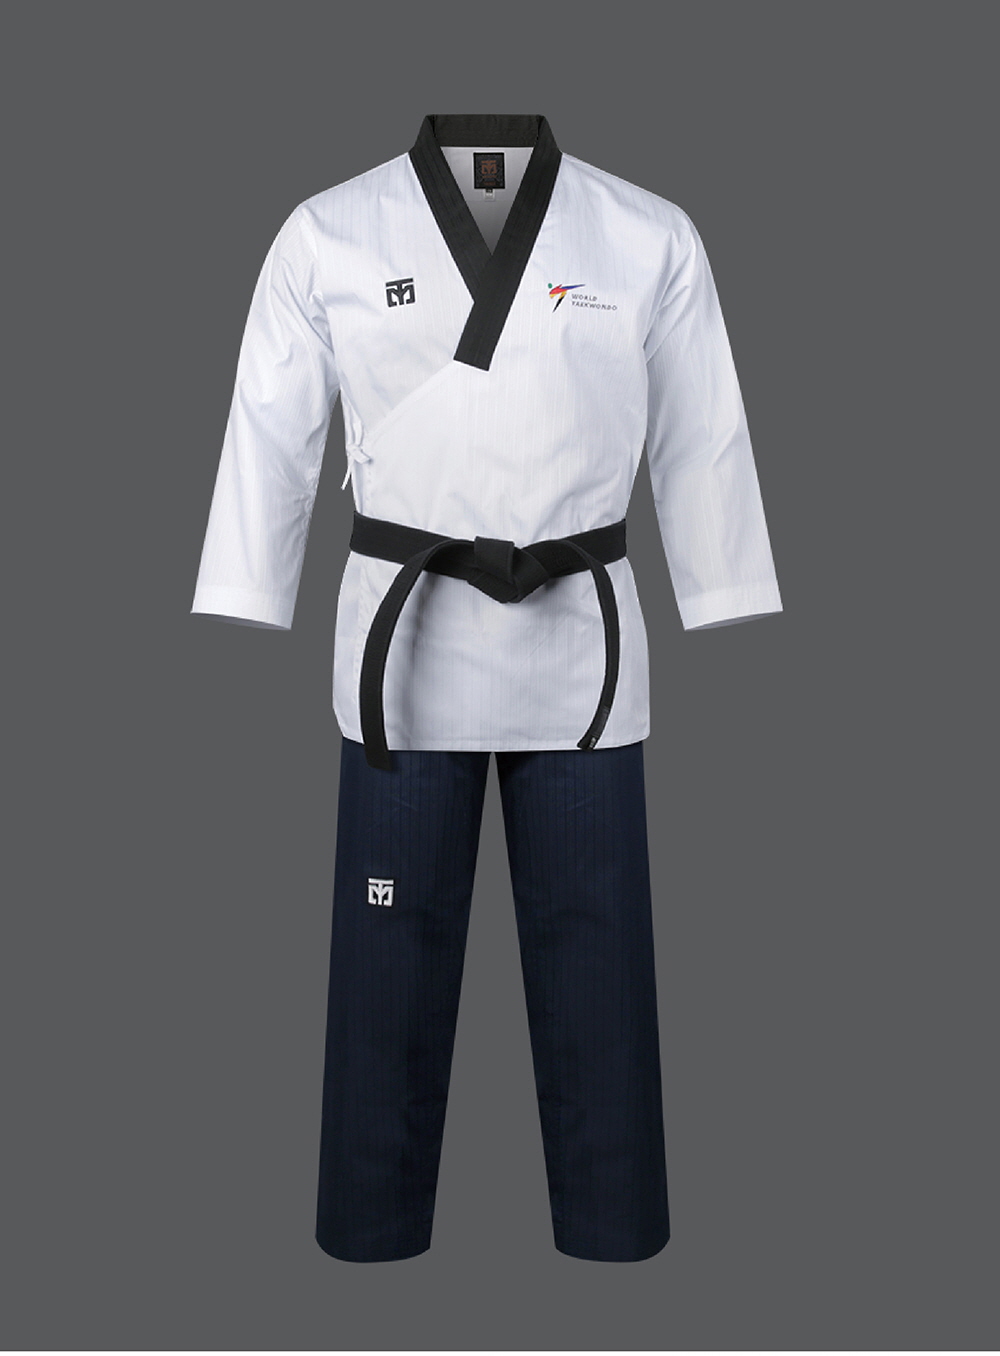 MOOTO Taebek 2 Poomsae Dan Uniform (Male)